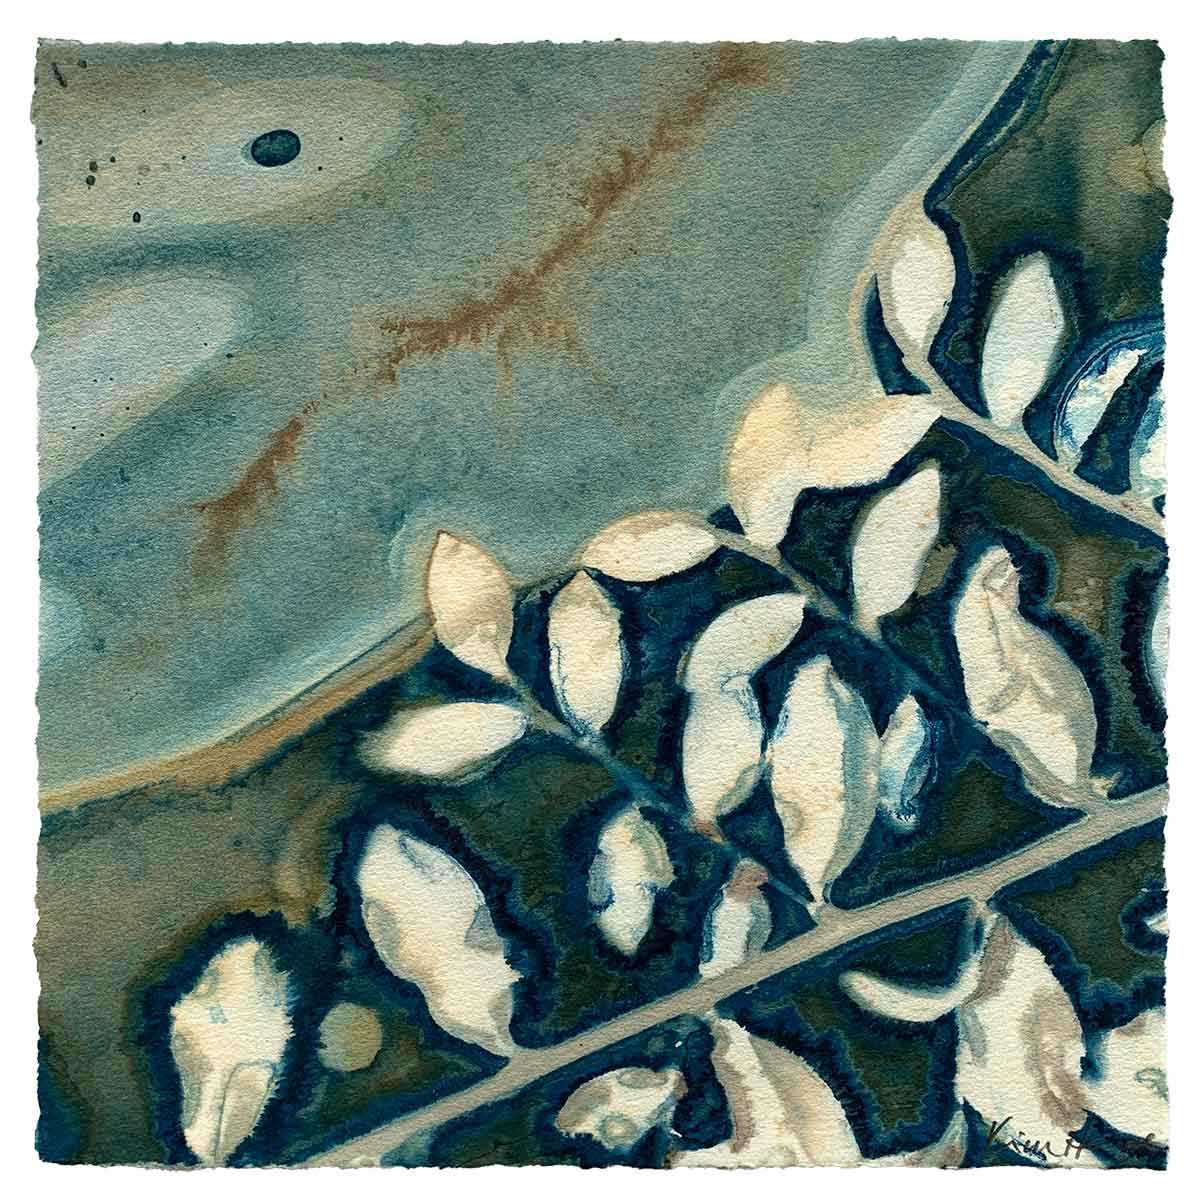 Water's Harvest 7 - Cyanotype - Kim Herringe